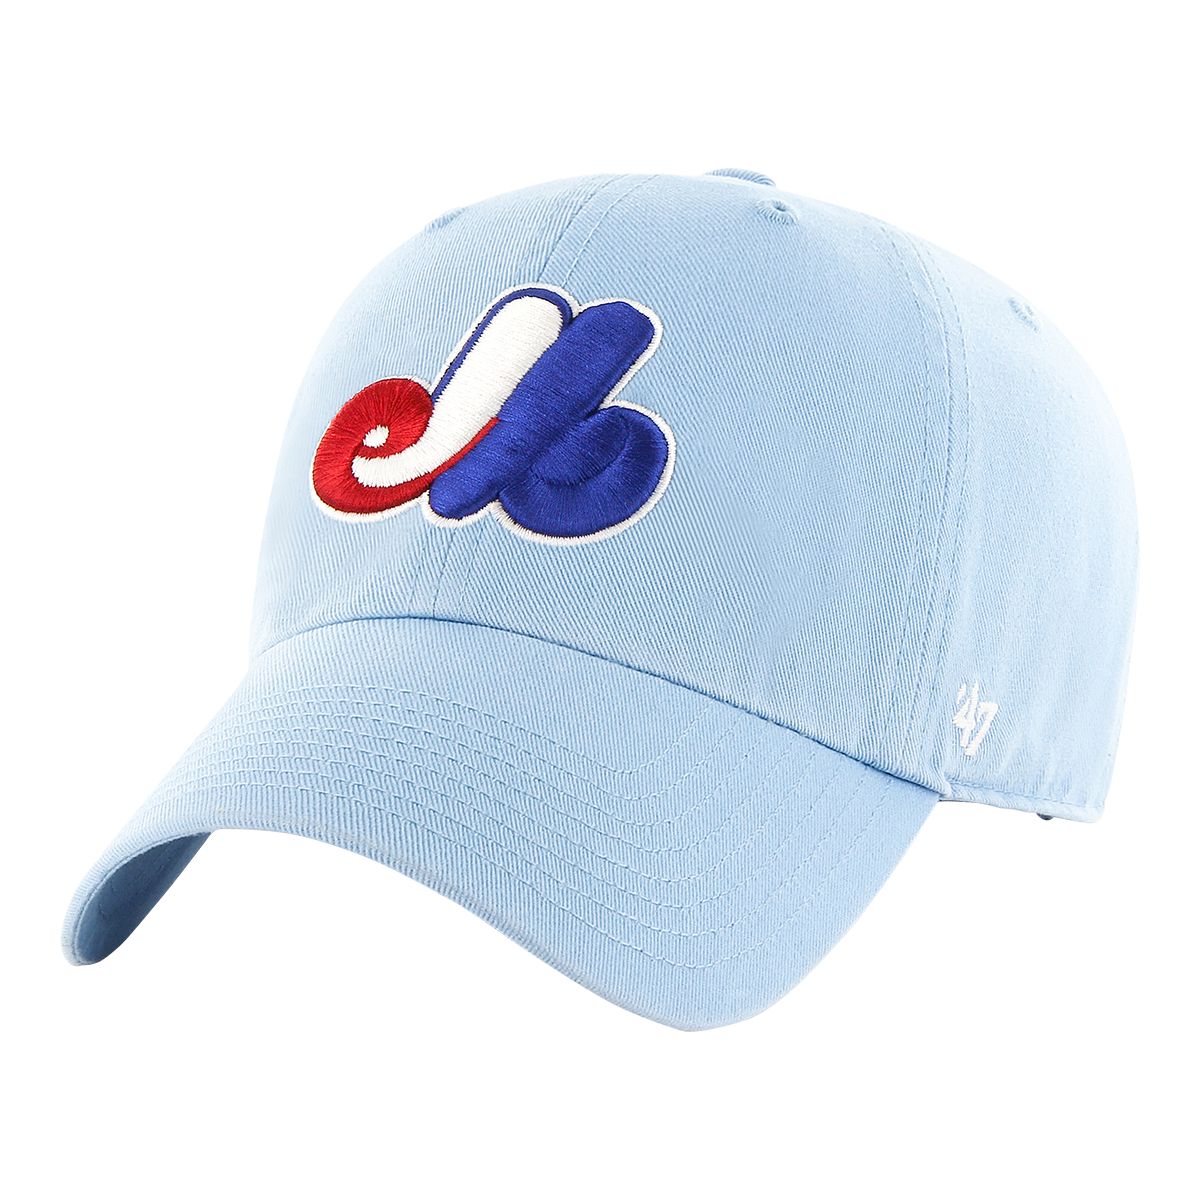 Edmonton Oilers 47Brand Franchise hat